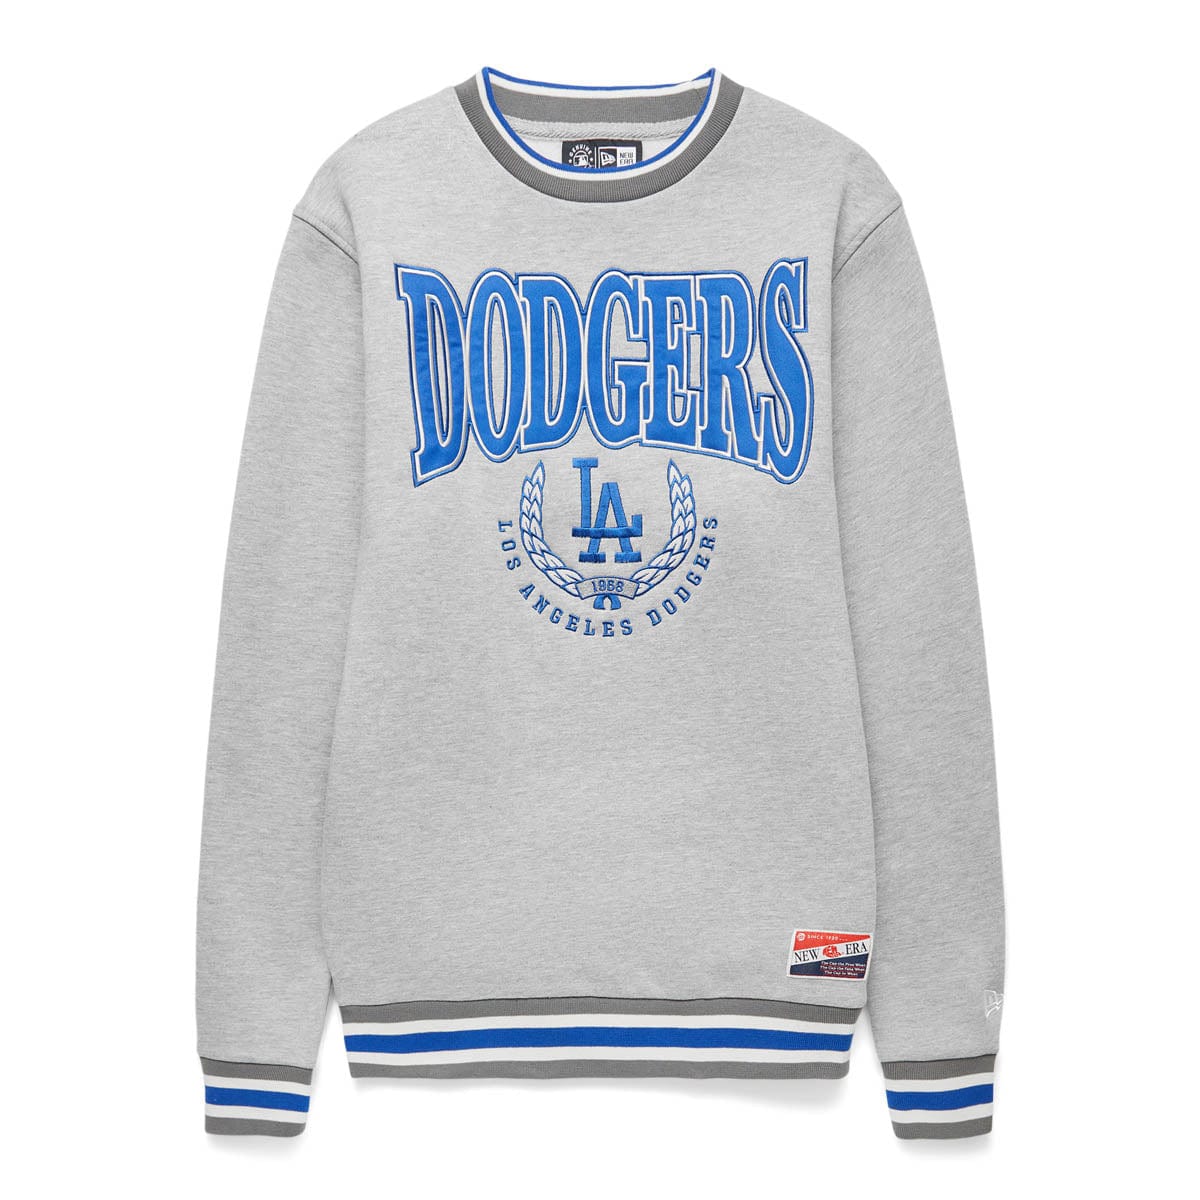 New Era Men's Royal Los Angeles Dodgers Sleeveless Pullover Hoodie